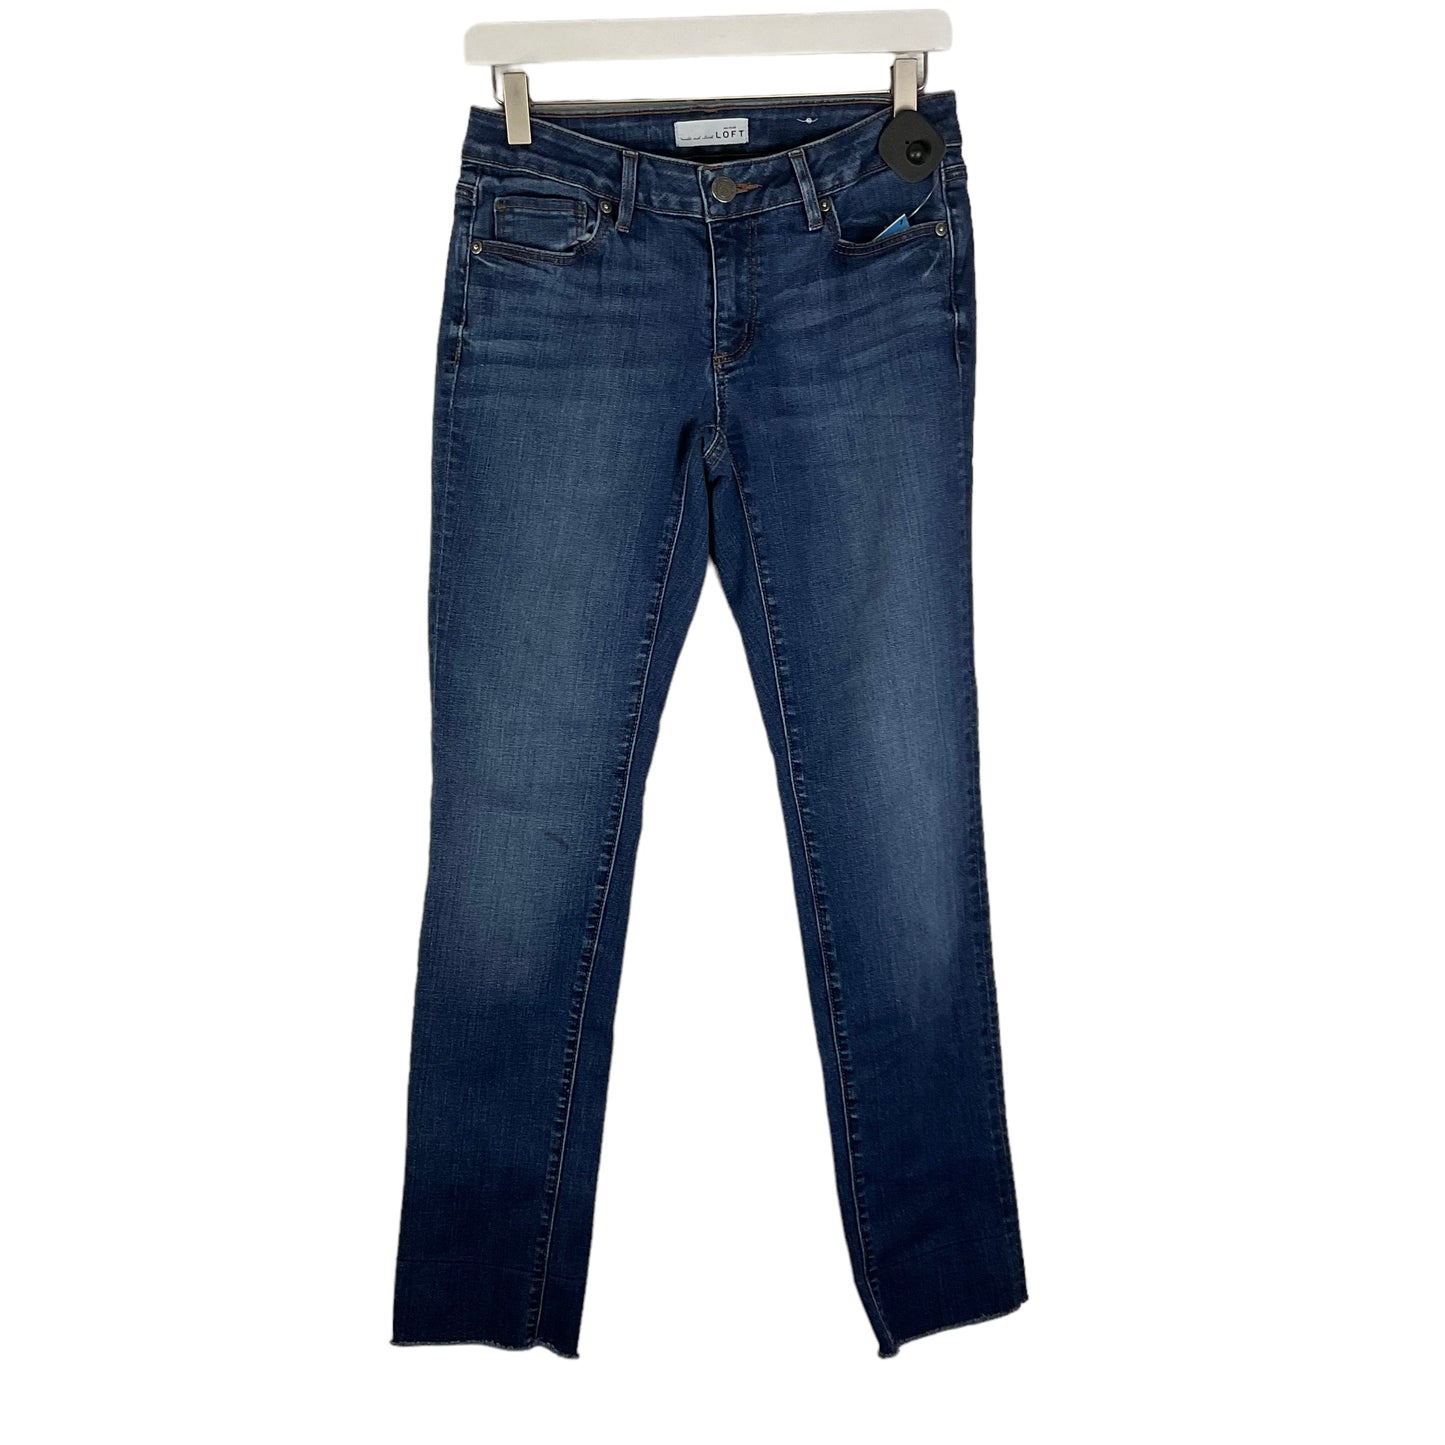 Jeans Skinny By Loft  Size: 2